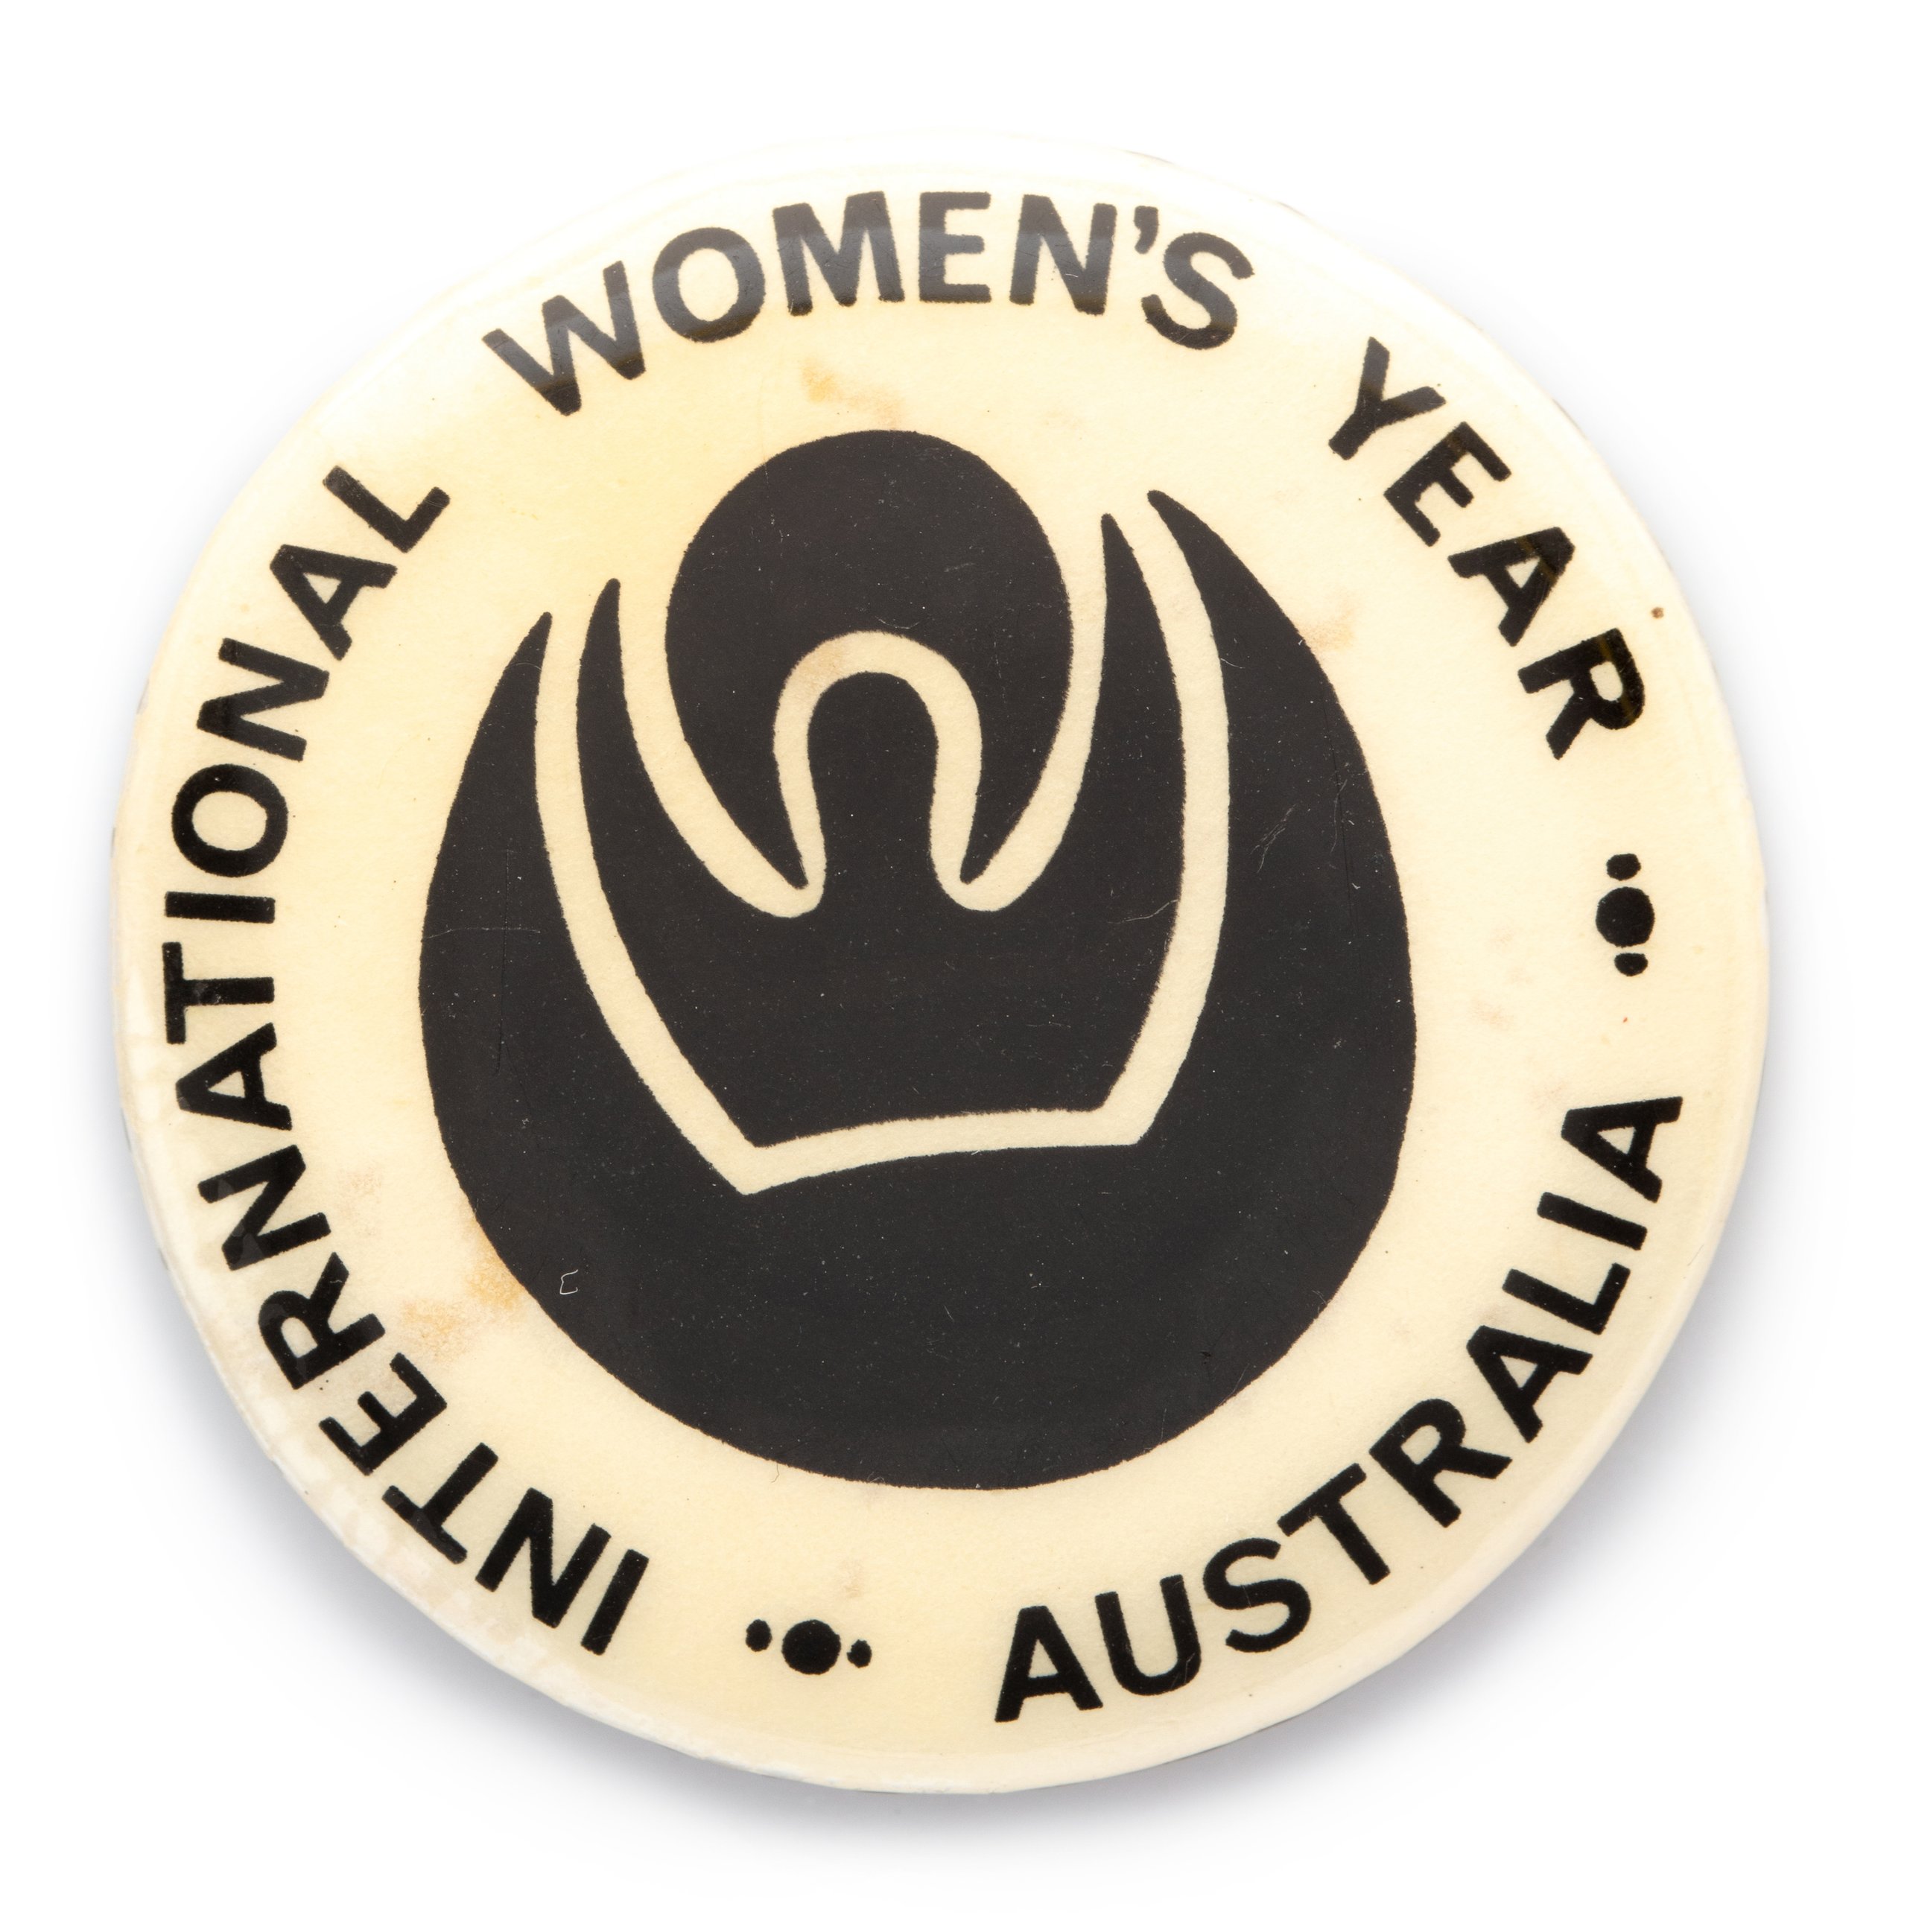 'International Women's Year' badge